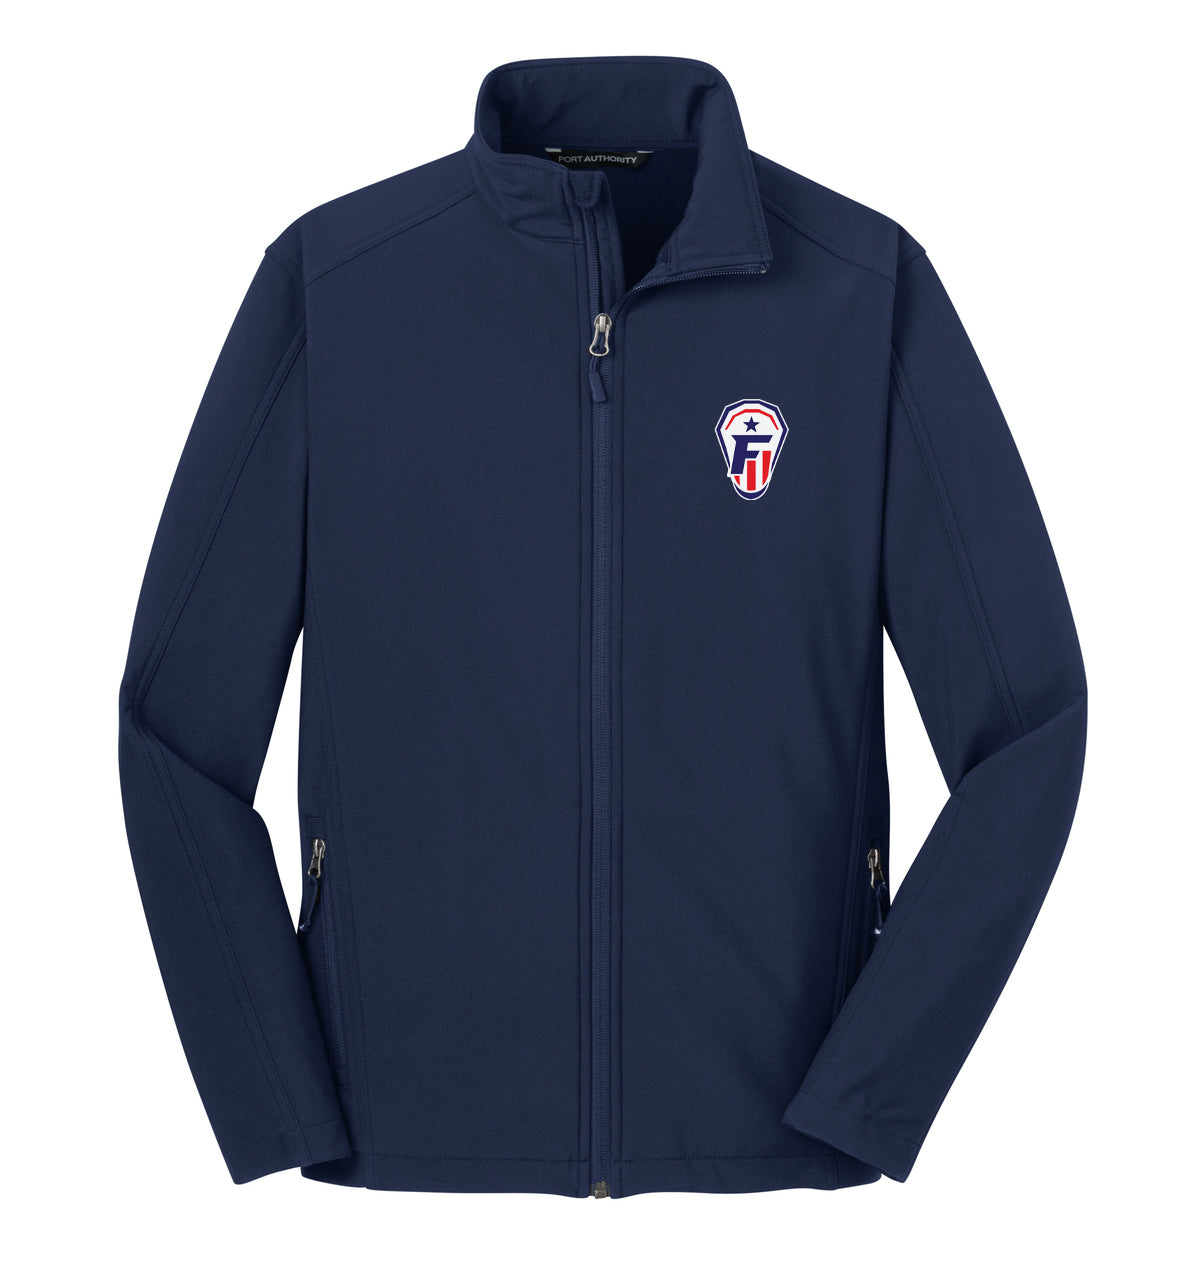 Freedom Lacrosse Navy Soft Shell Jacket